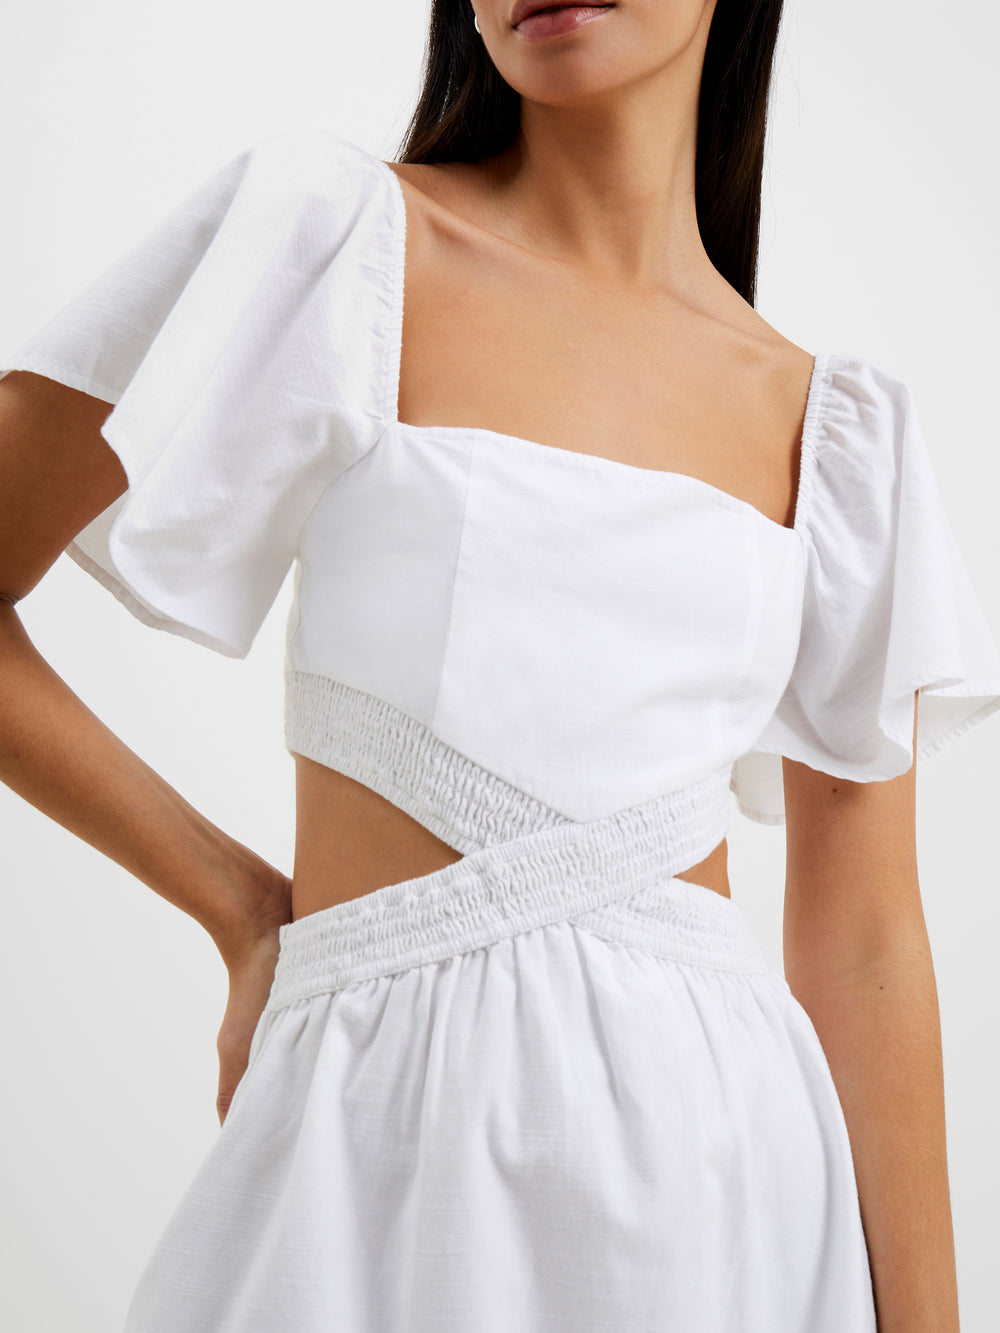 Buy PRETTYGARDEN Women's Summer Midi Bodycon Dresses Casual Crew Neck Side  Slit Sleeveless Knit Cut Out Tank Top Dress, White, Medium at Amazon.in